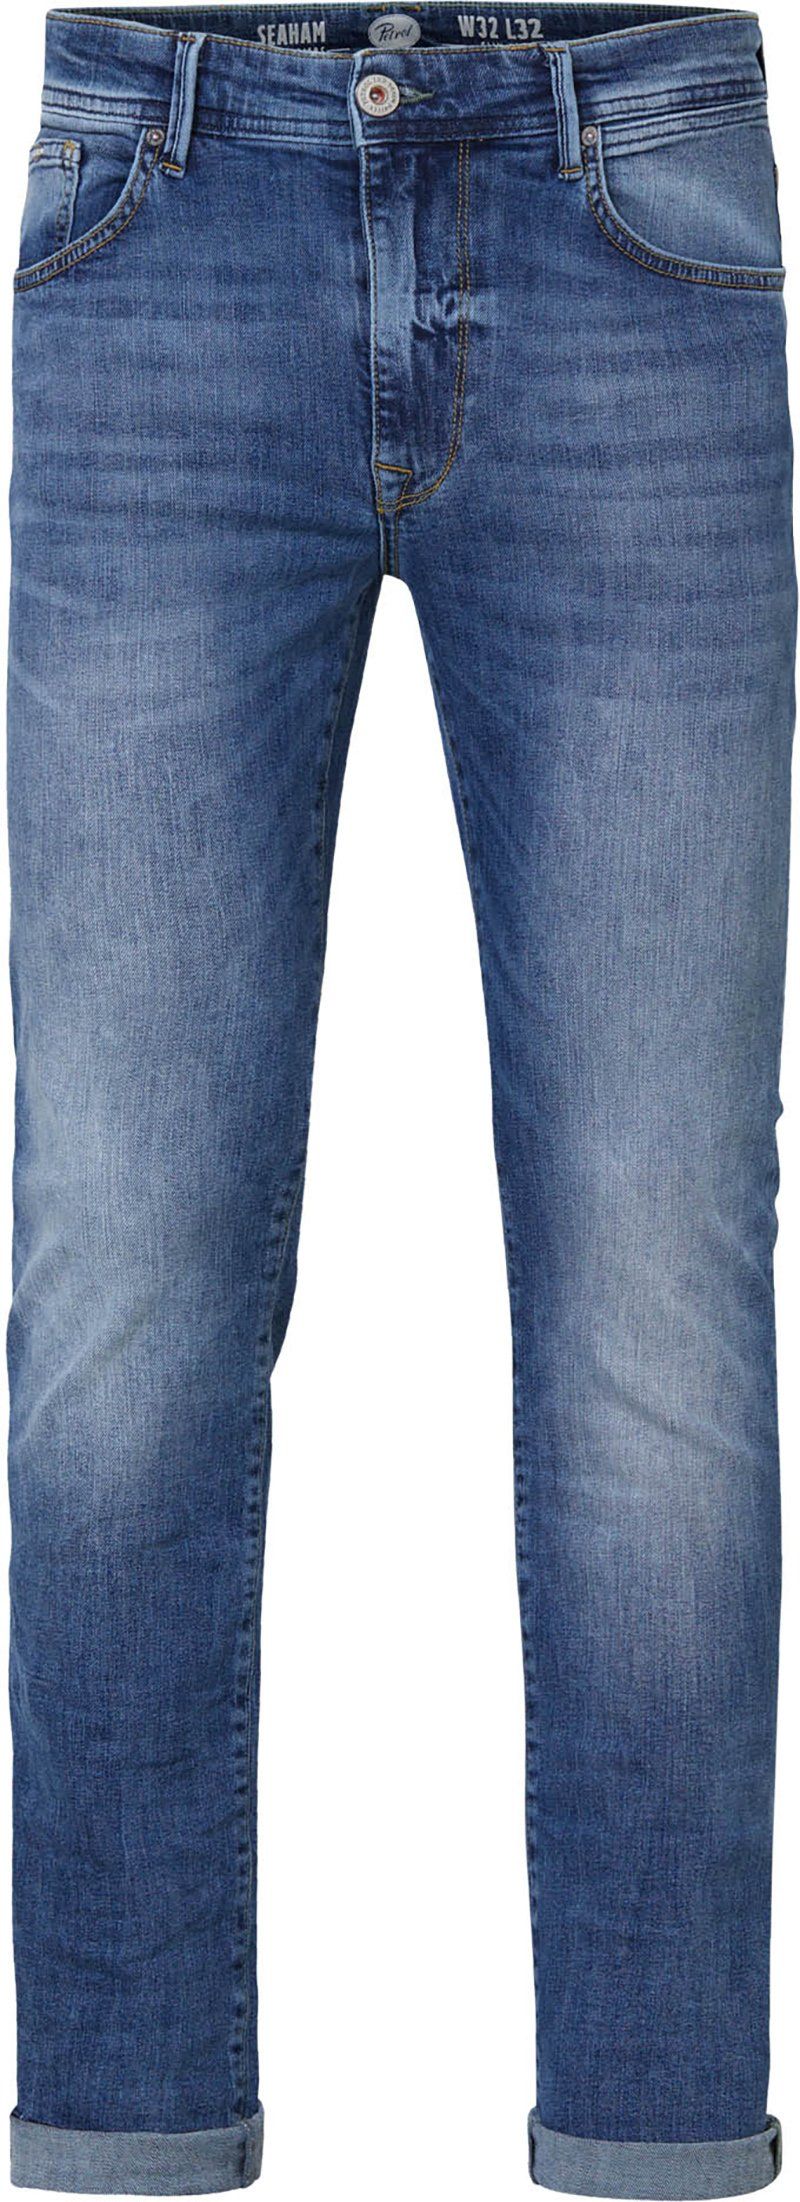 Petrol Seaham Jeans Indigo Blue - Größe W 30 - L 34 von Petrol